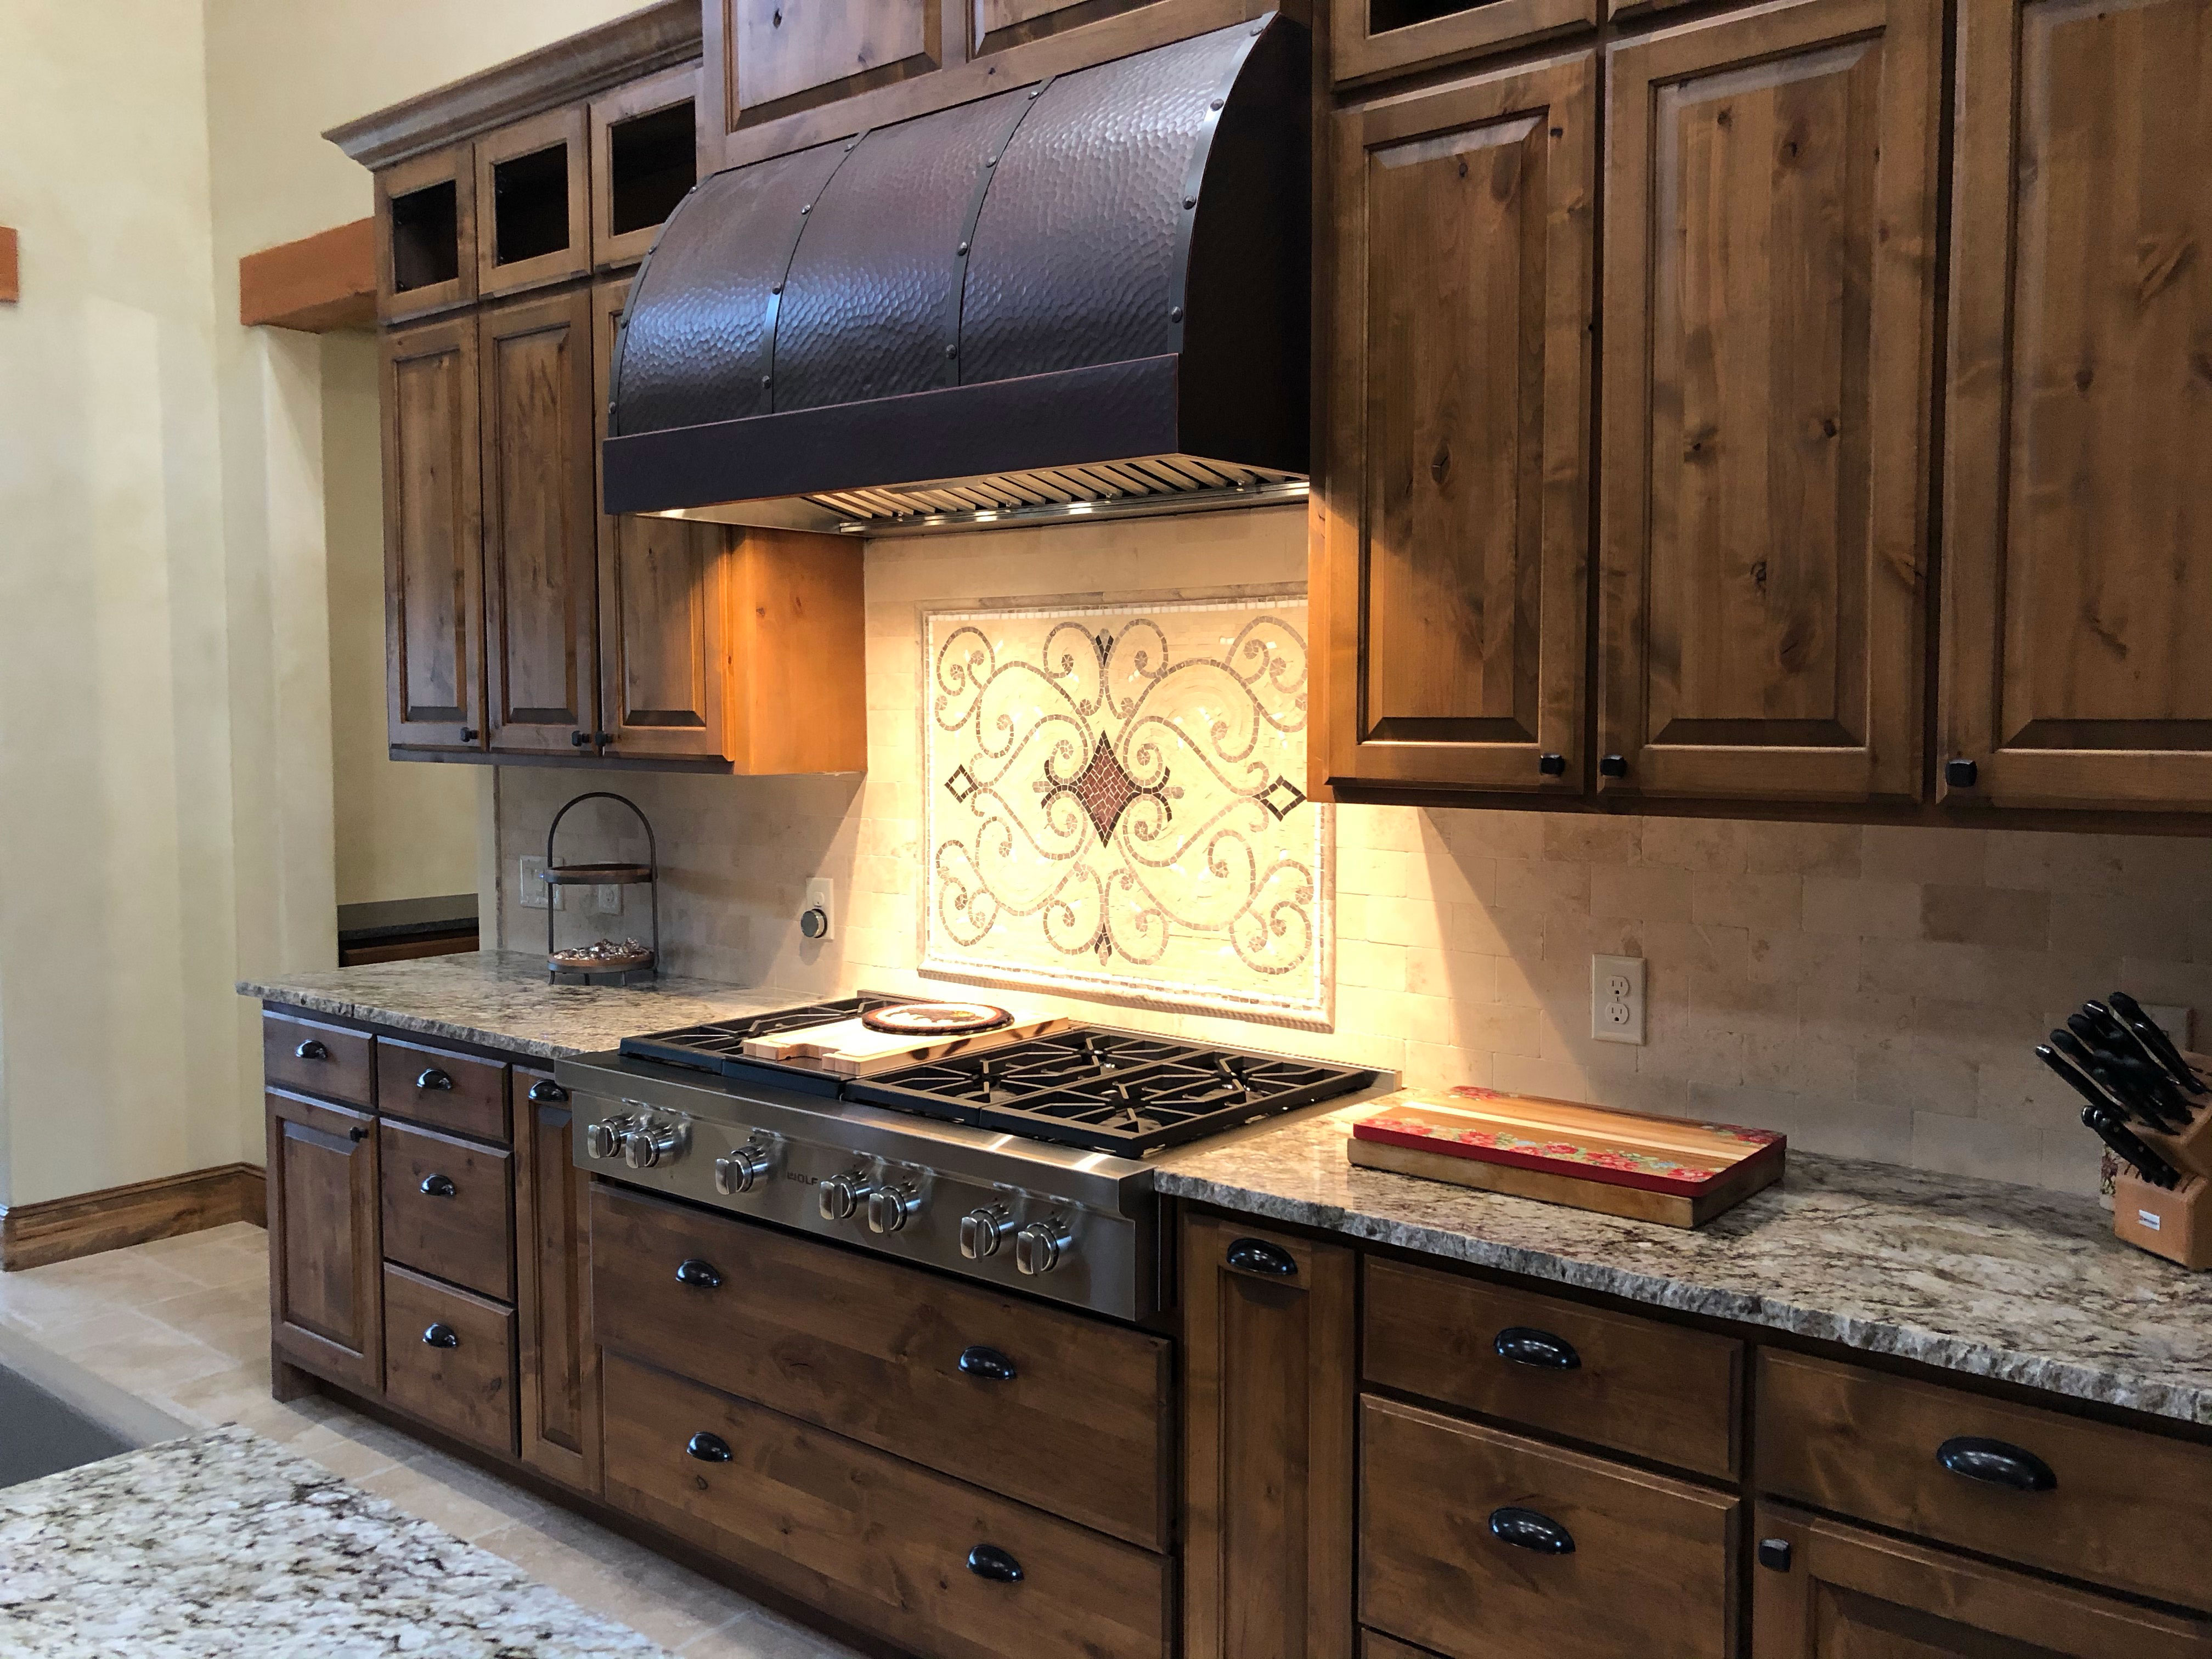 Stunning kitchen adorned enhances range hood, wood kitchen cabinets and marble kitchen countertops, brick backsplash